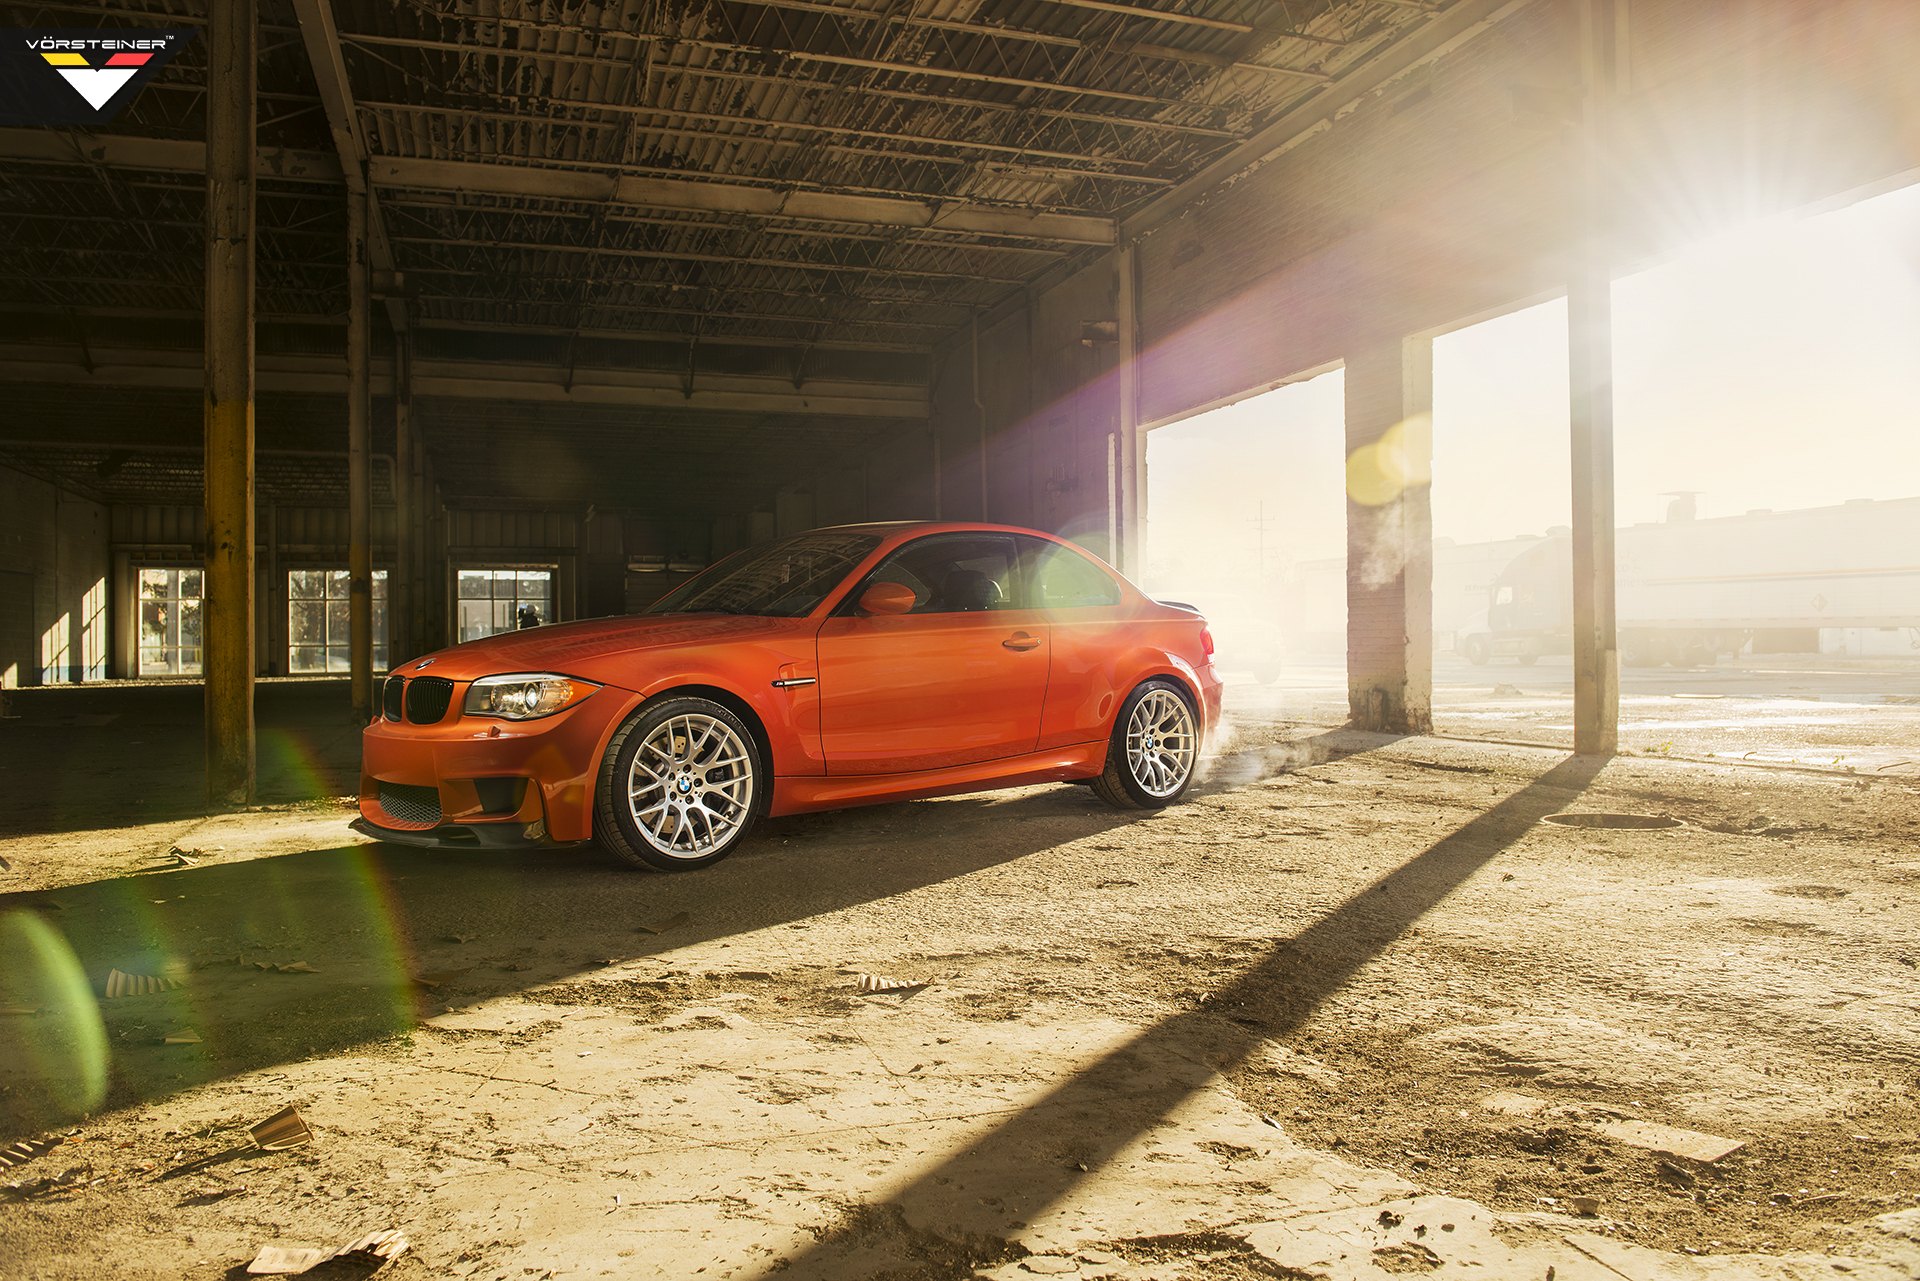 Custom Projector Headlights on Orange BMW 1-Series - Photo by Vorstiner